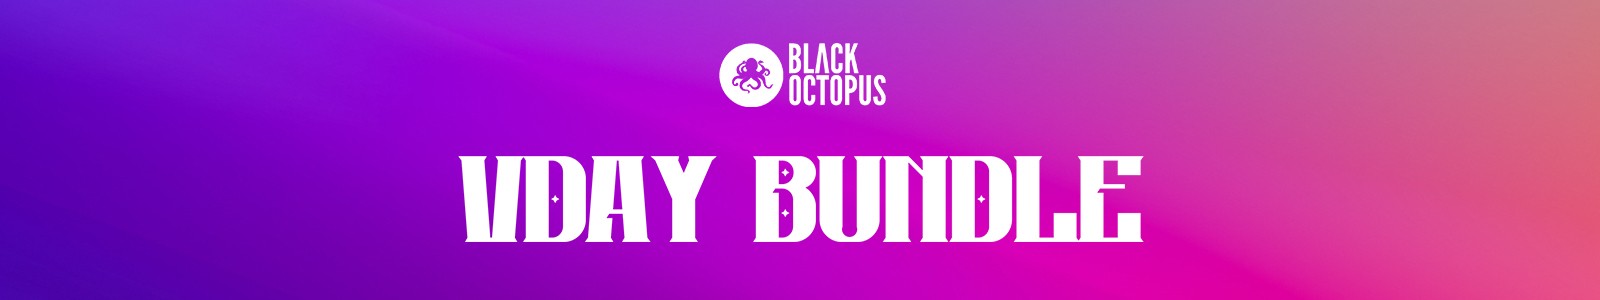 Live Instruments Sample Pack Bundle by Black Octopus